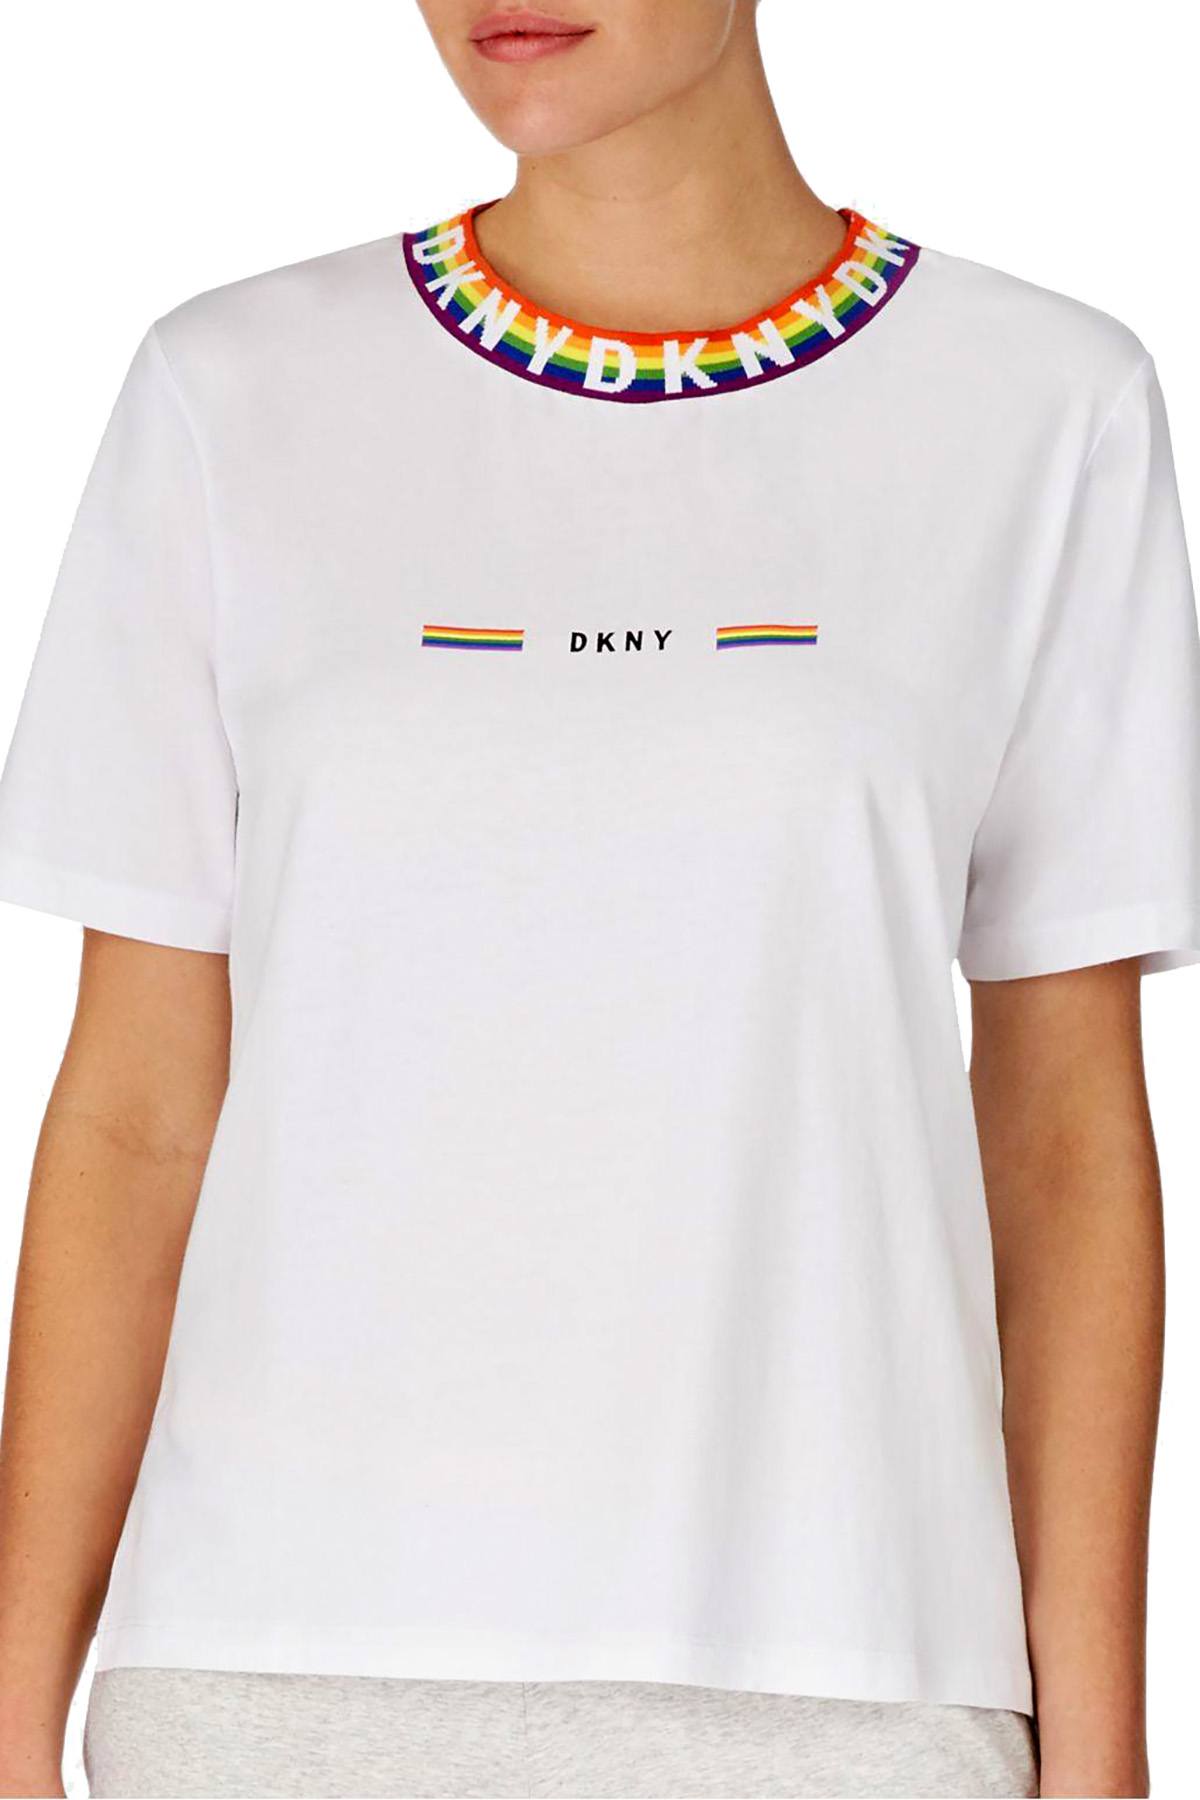 DKNY White Rainbow Pride Logo Short Sleeve Lounge Top